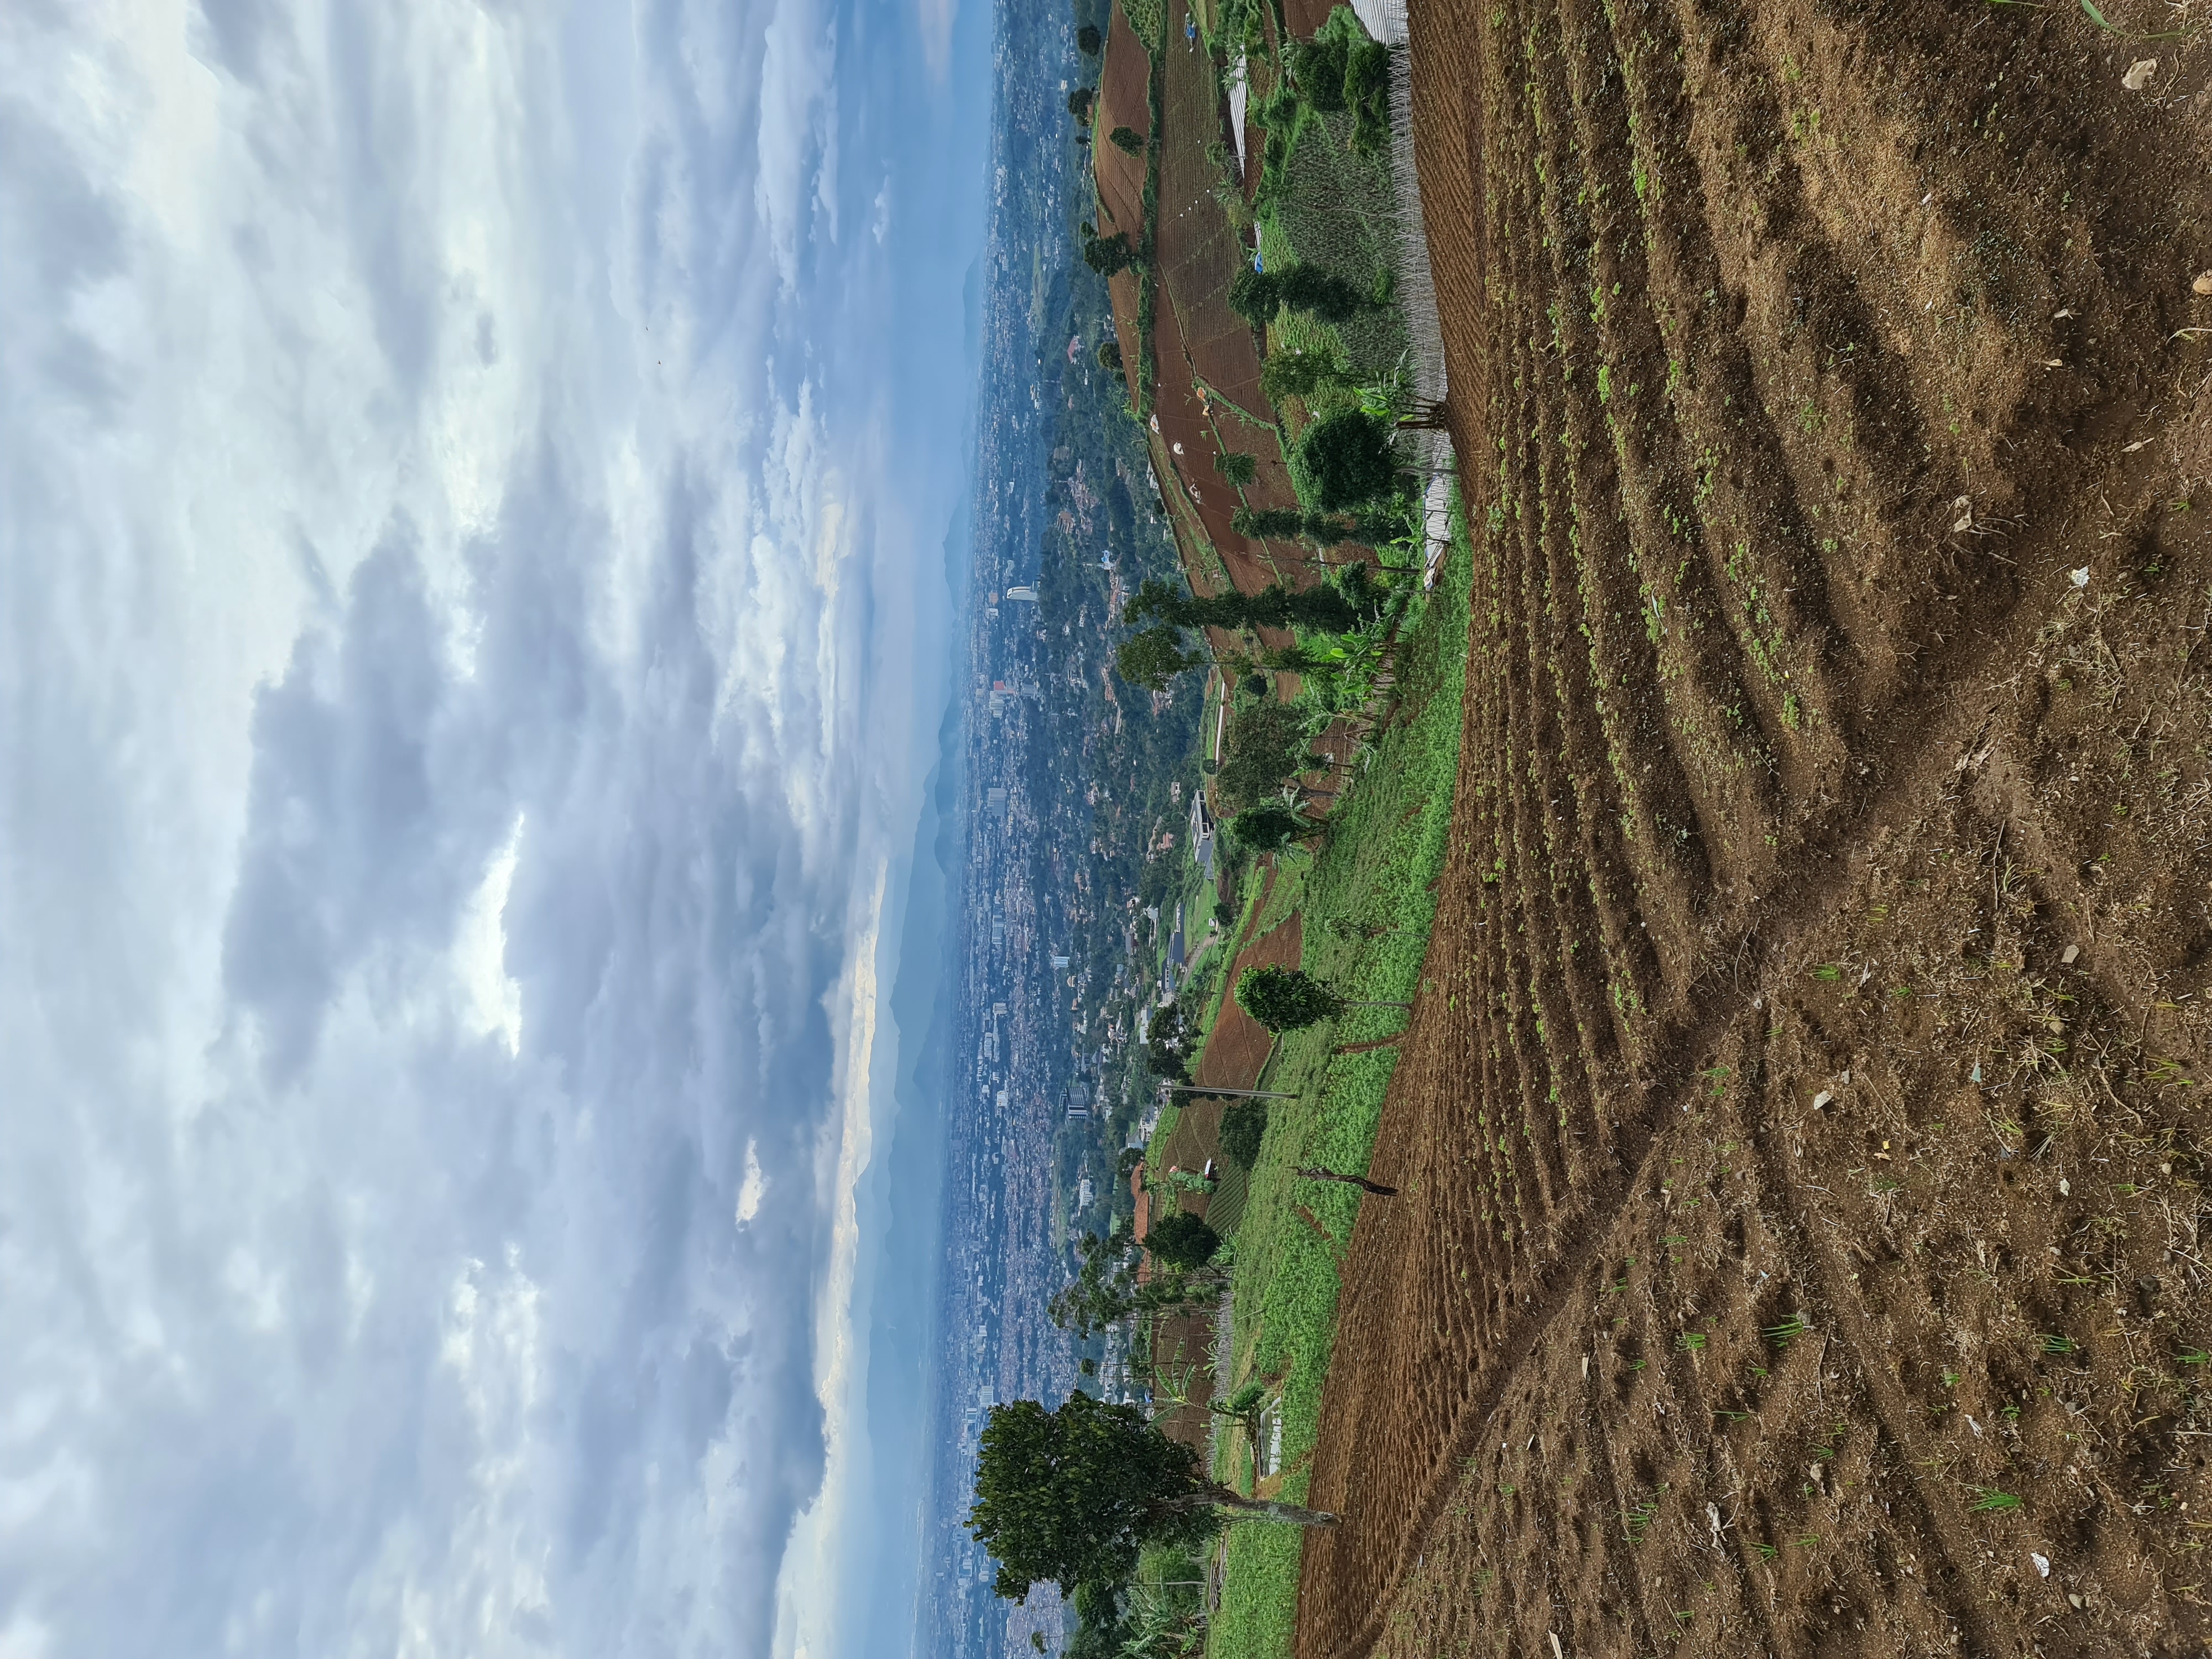 7/35 - Pemandangan lainnya dari tanah pertanian warga dengan pandangan mengarah kekota Bandung